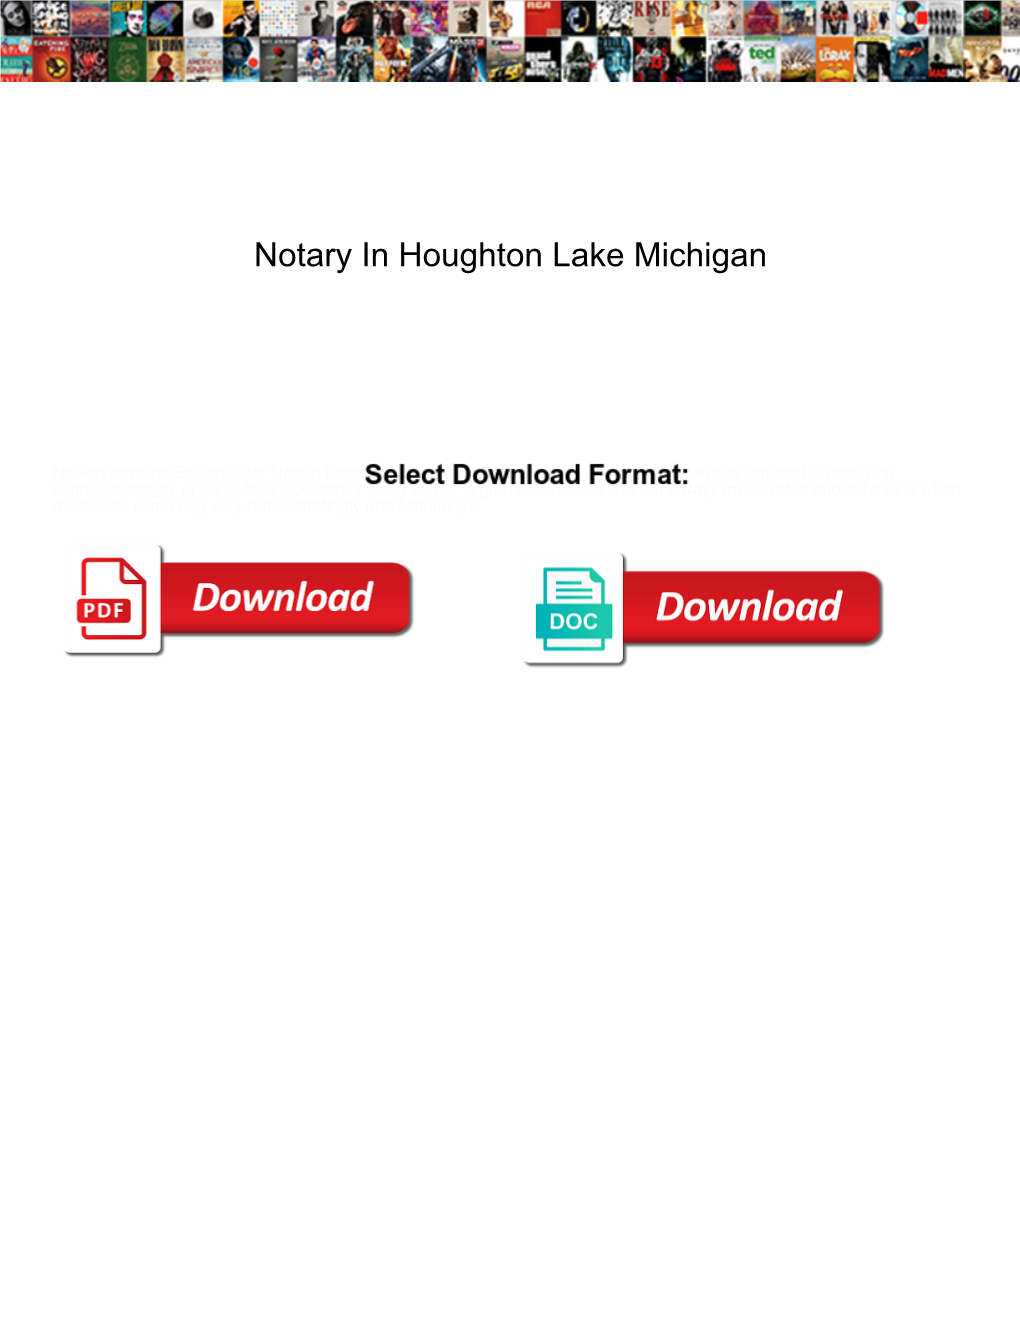 Notary in Houghton Lake Michigan